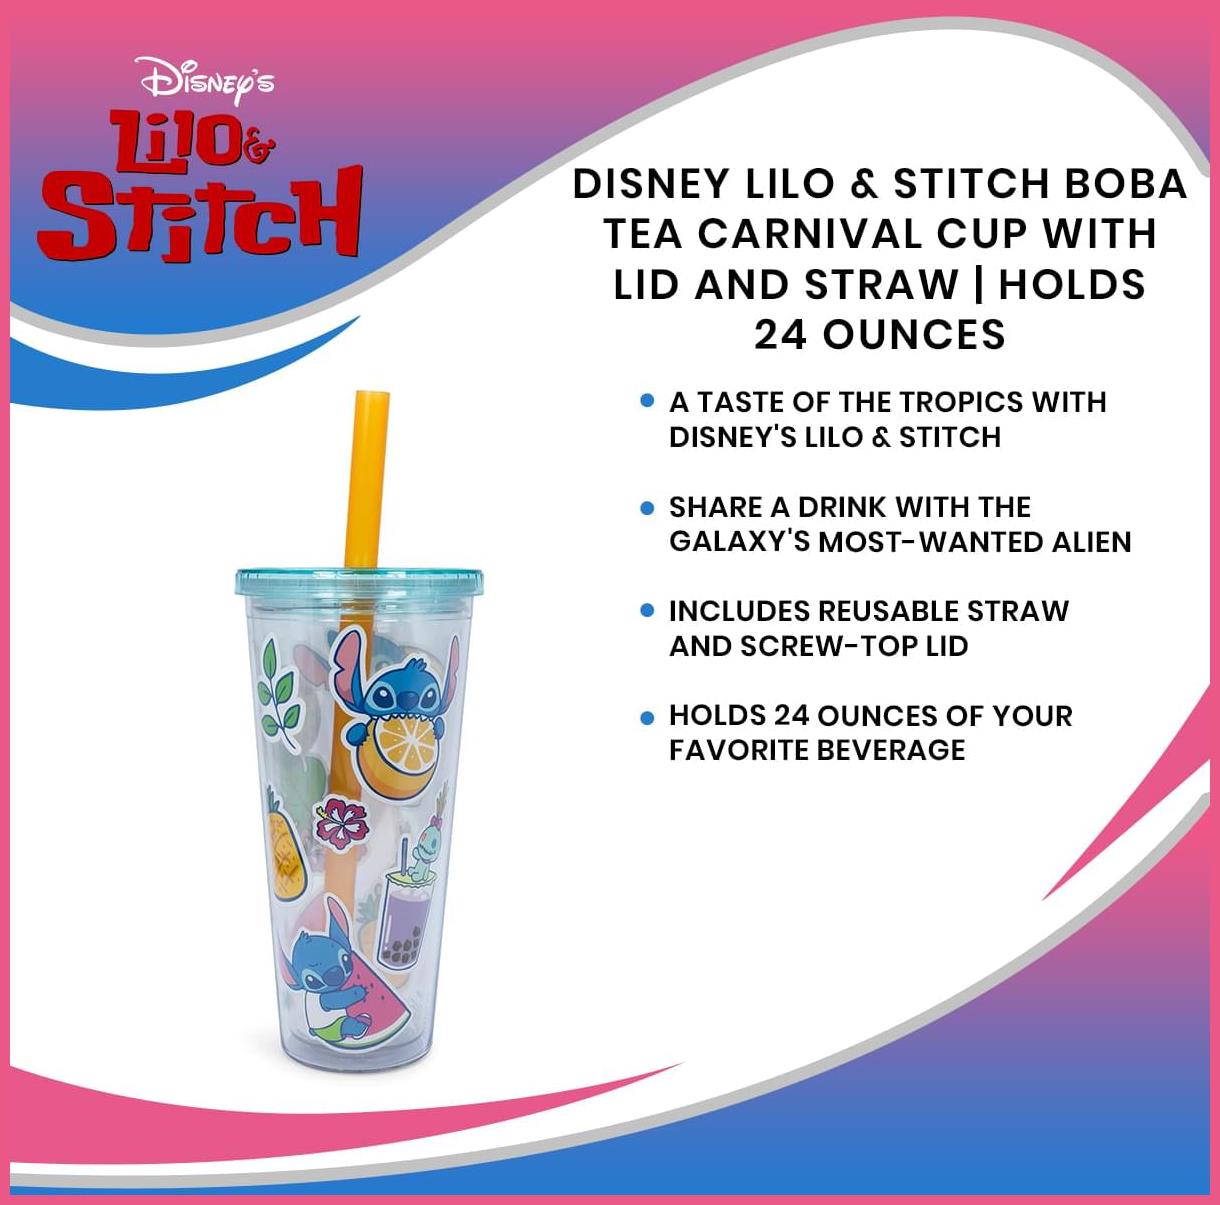 Silver Buffalo Disney Lilo & Stitch ohana Carnival Cup With Lid And Straw